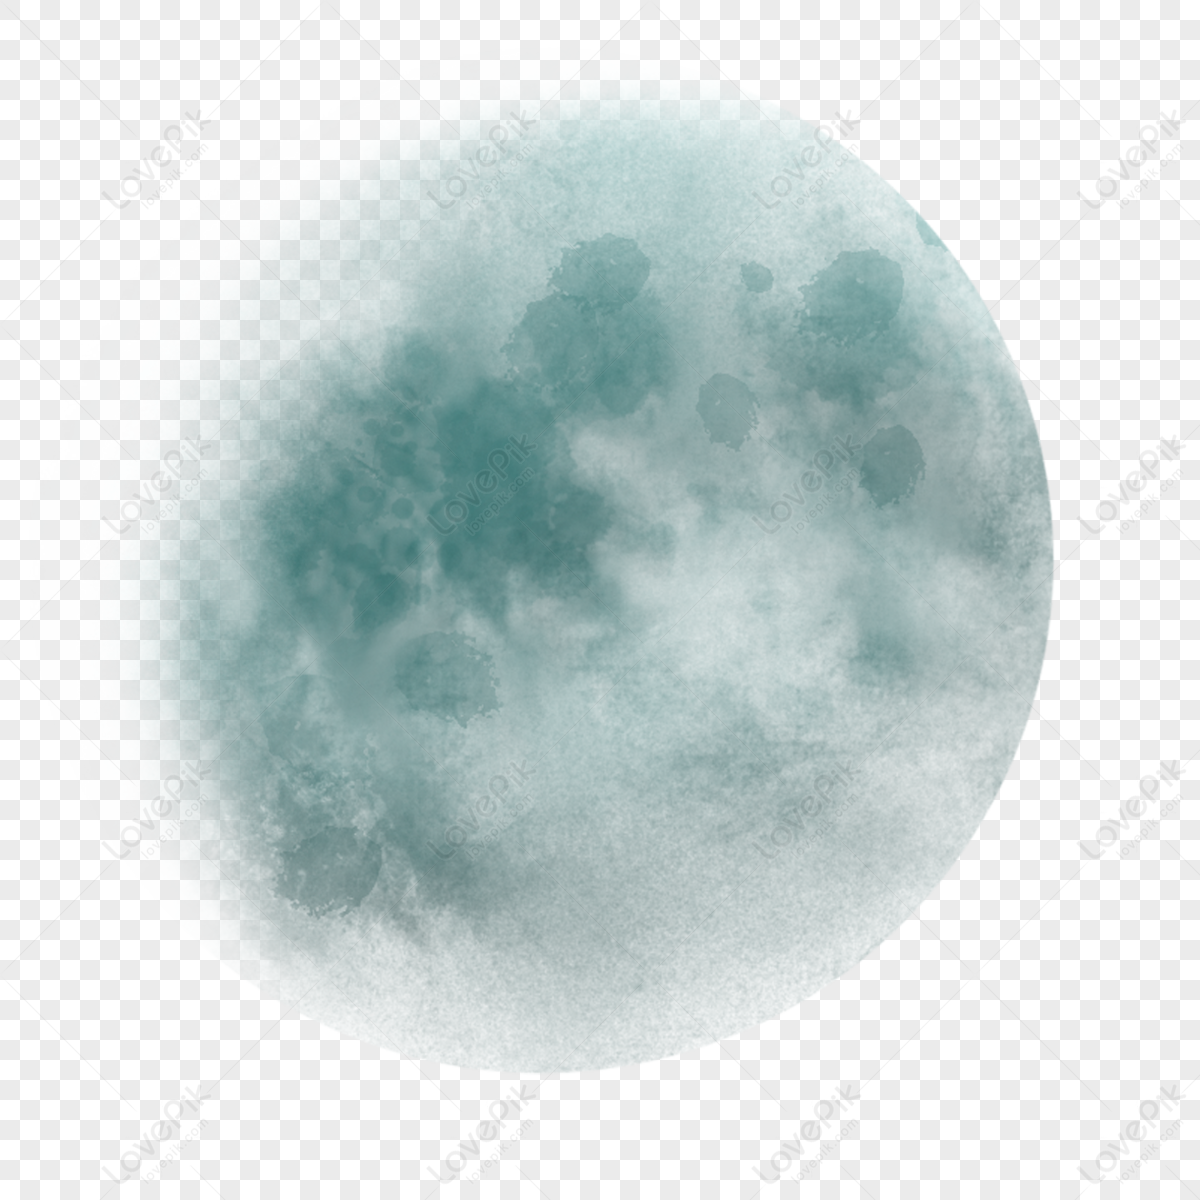 560+ Moon Png Images, Free Transparent Images Download - Lovepik